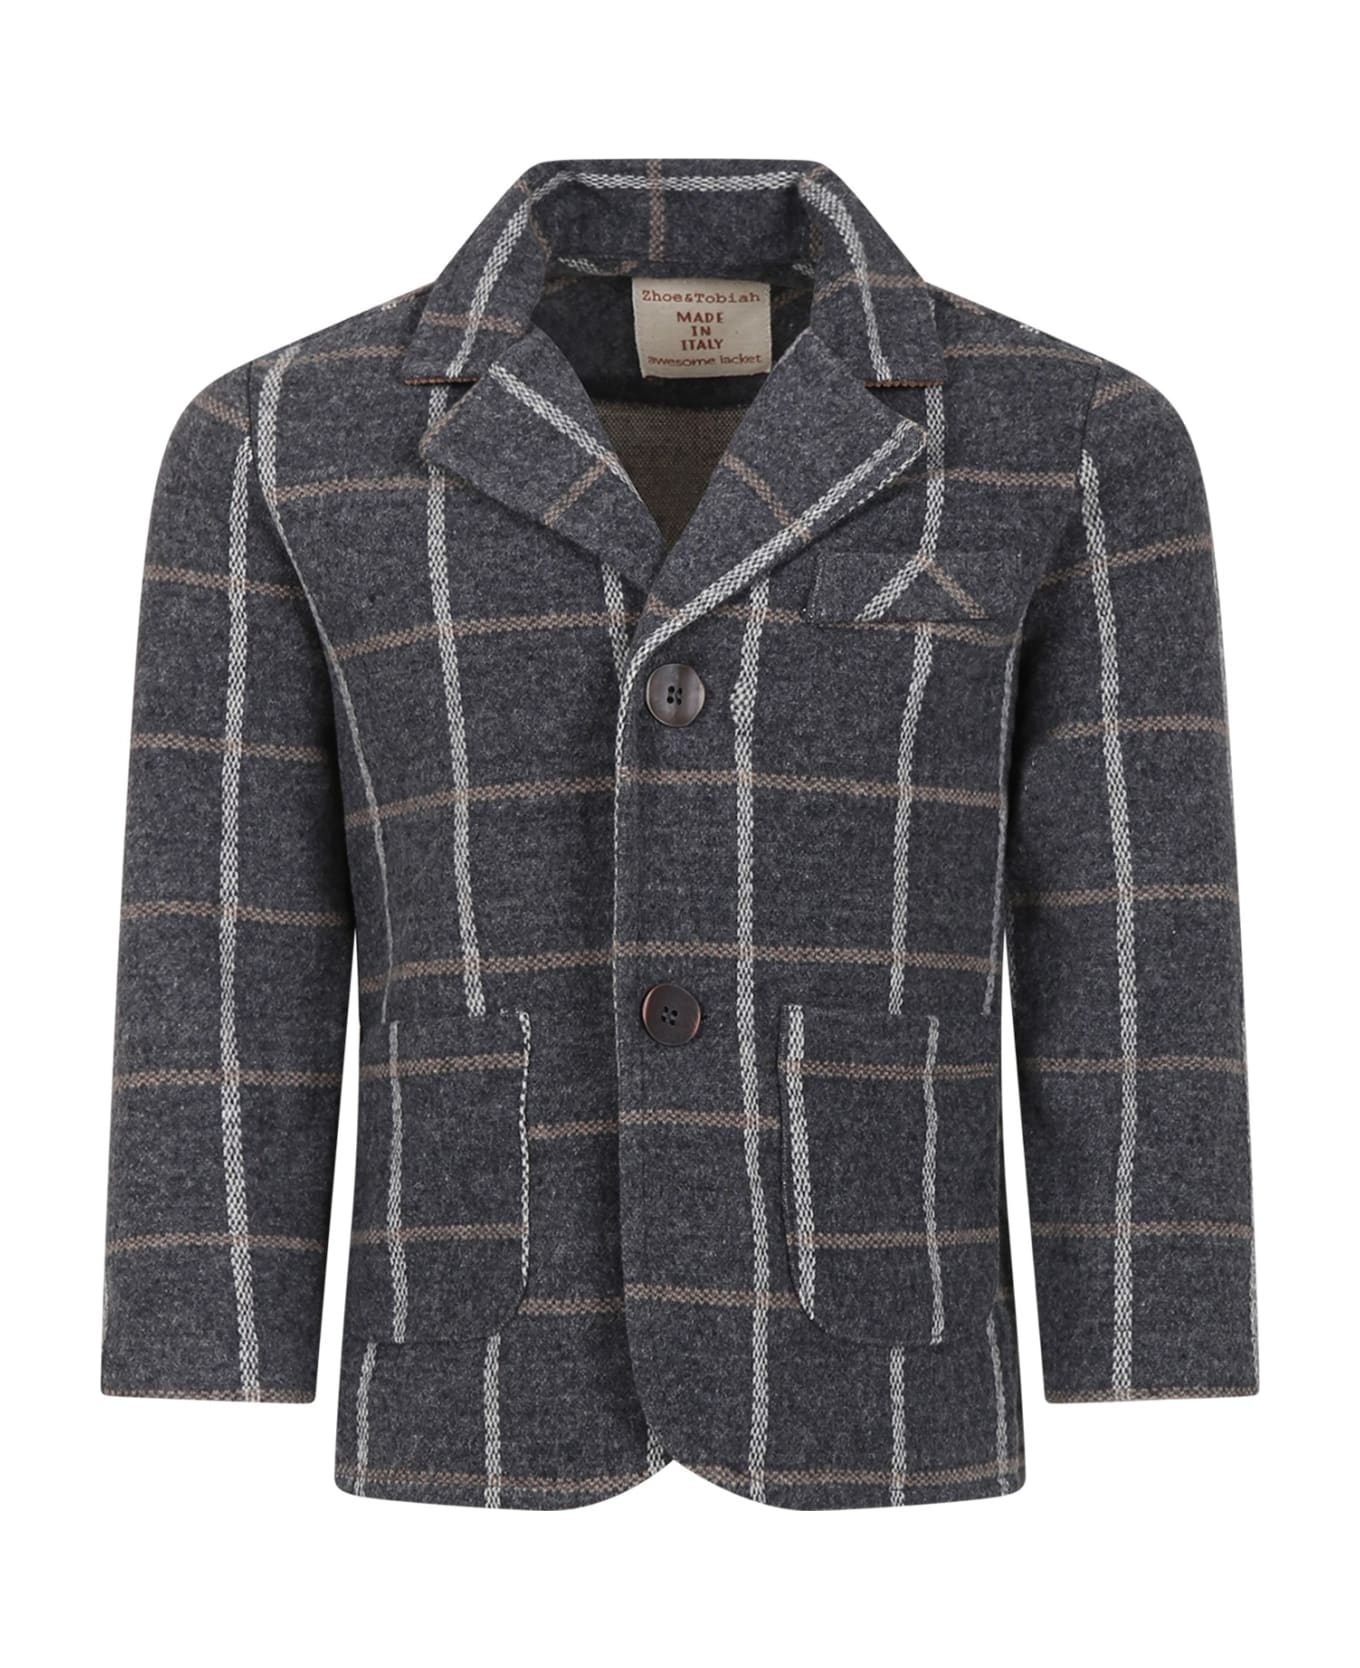 Zhoe & Tobiah Grey Jacket For Boy - Grey